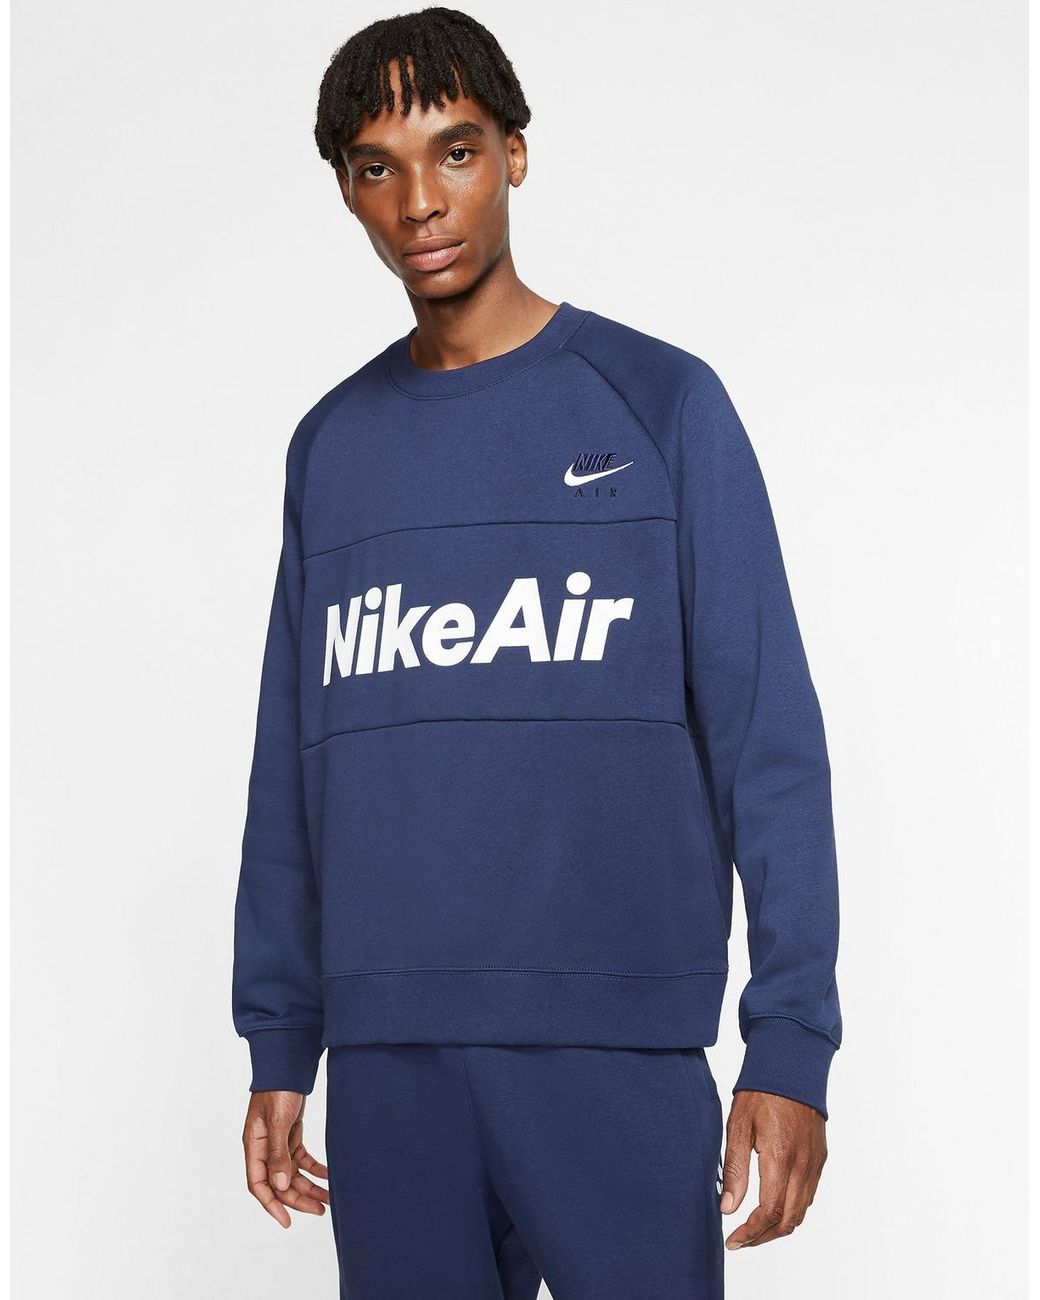 Nike Fleece Air Crew Sweatshirt in Blue for Men - Lyst